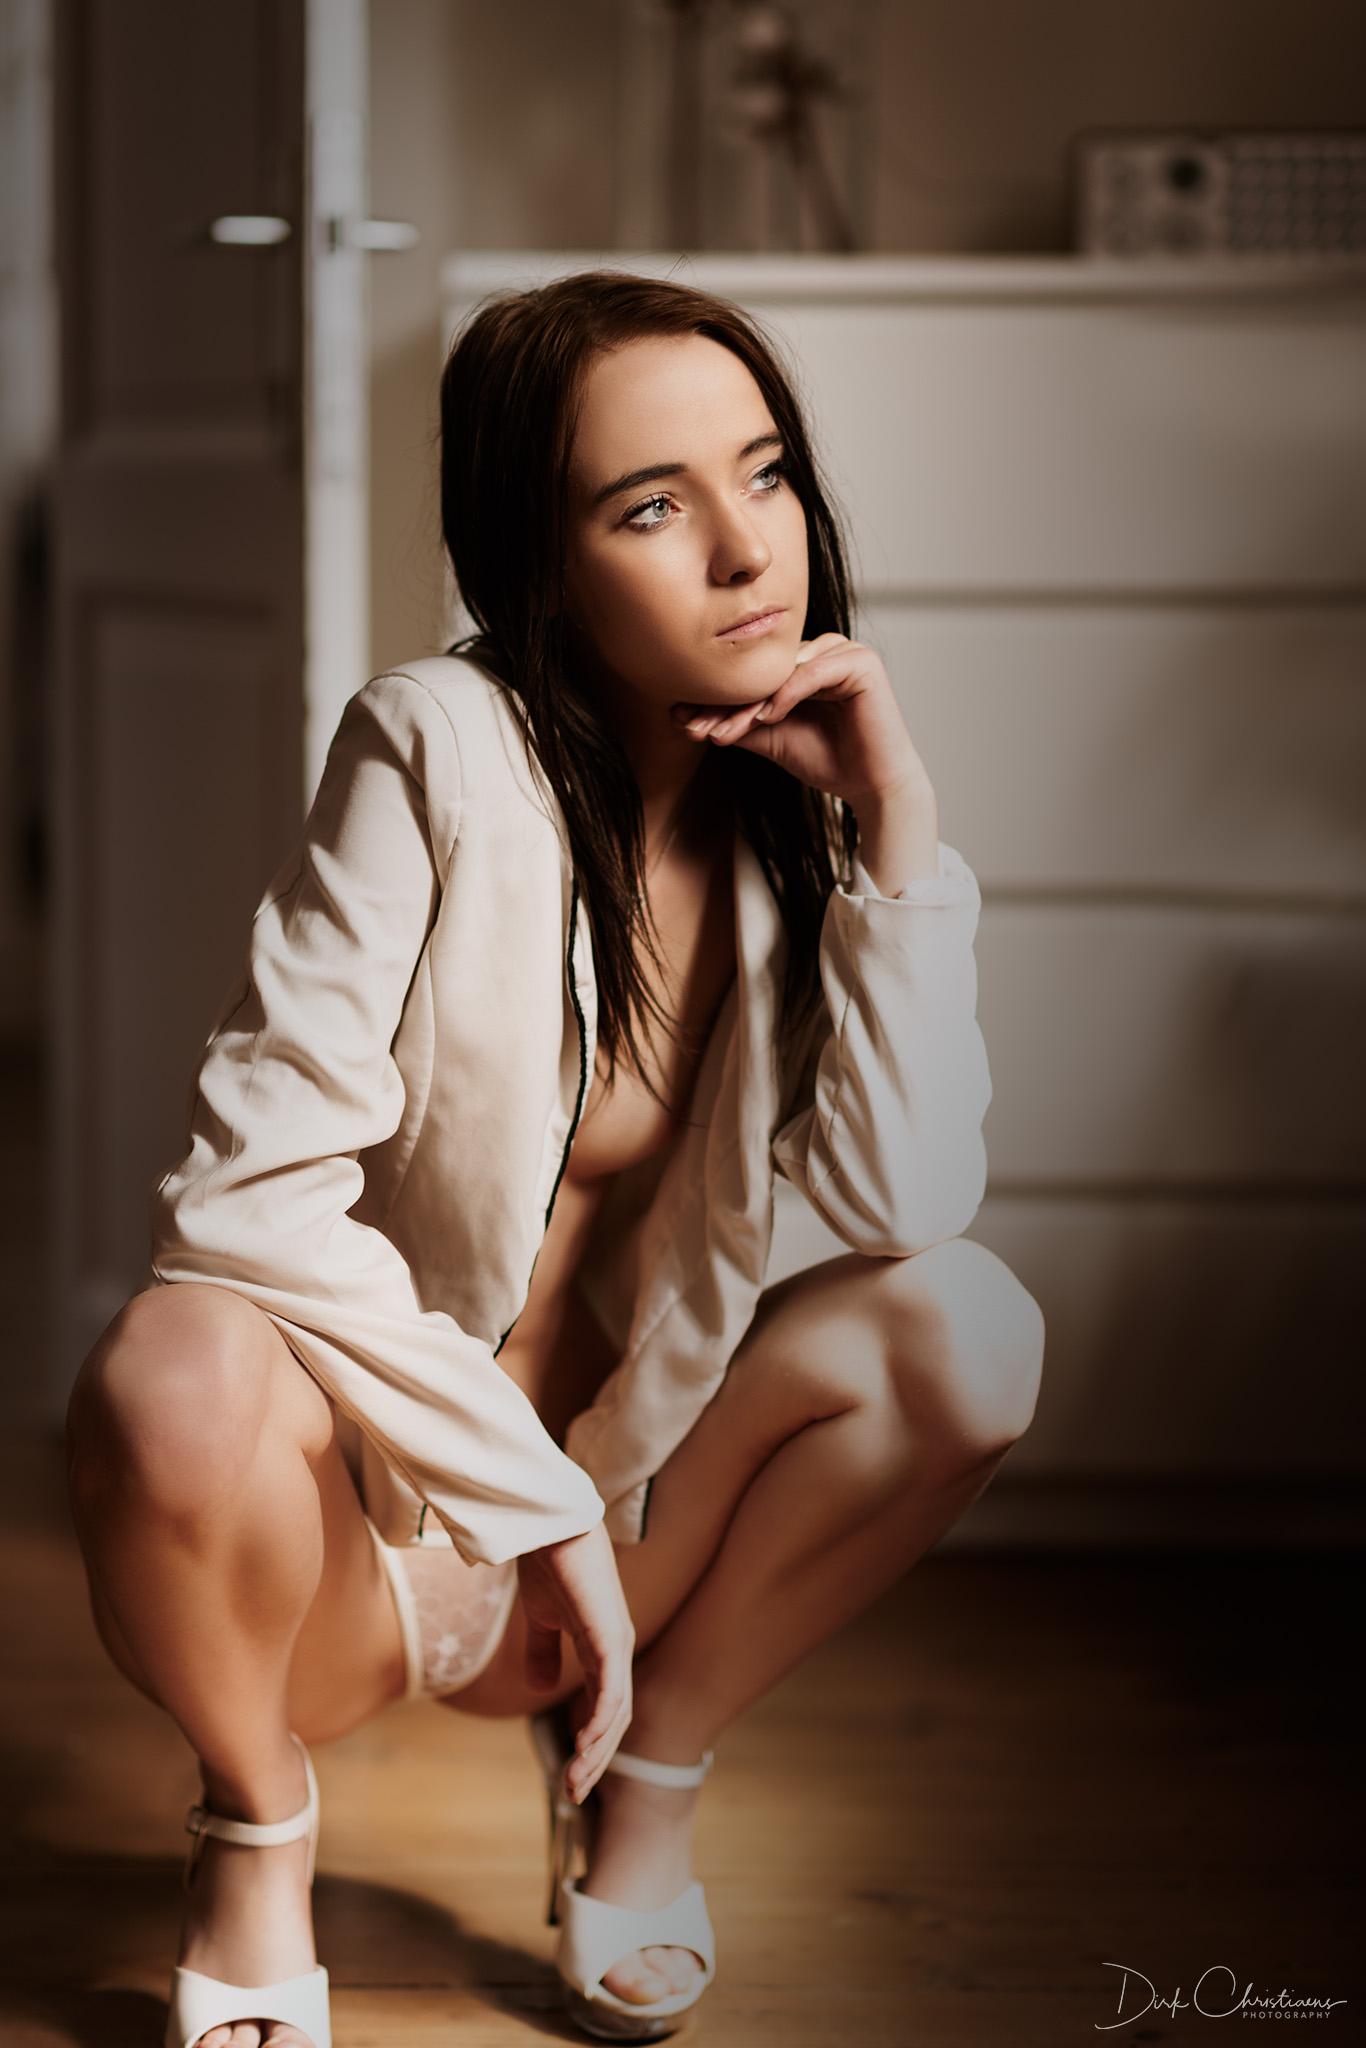 Jill Dewyn, model from Belgium at a boudoir photoshoot